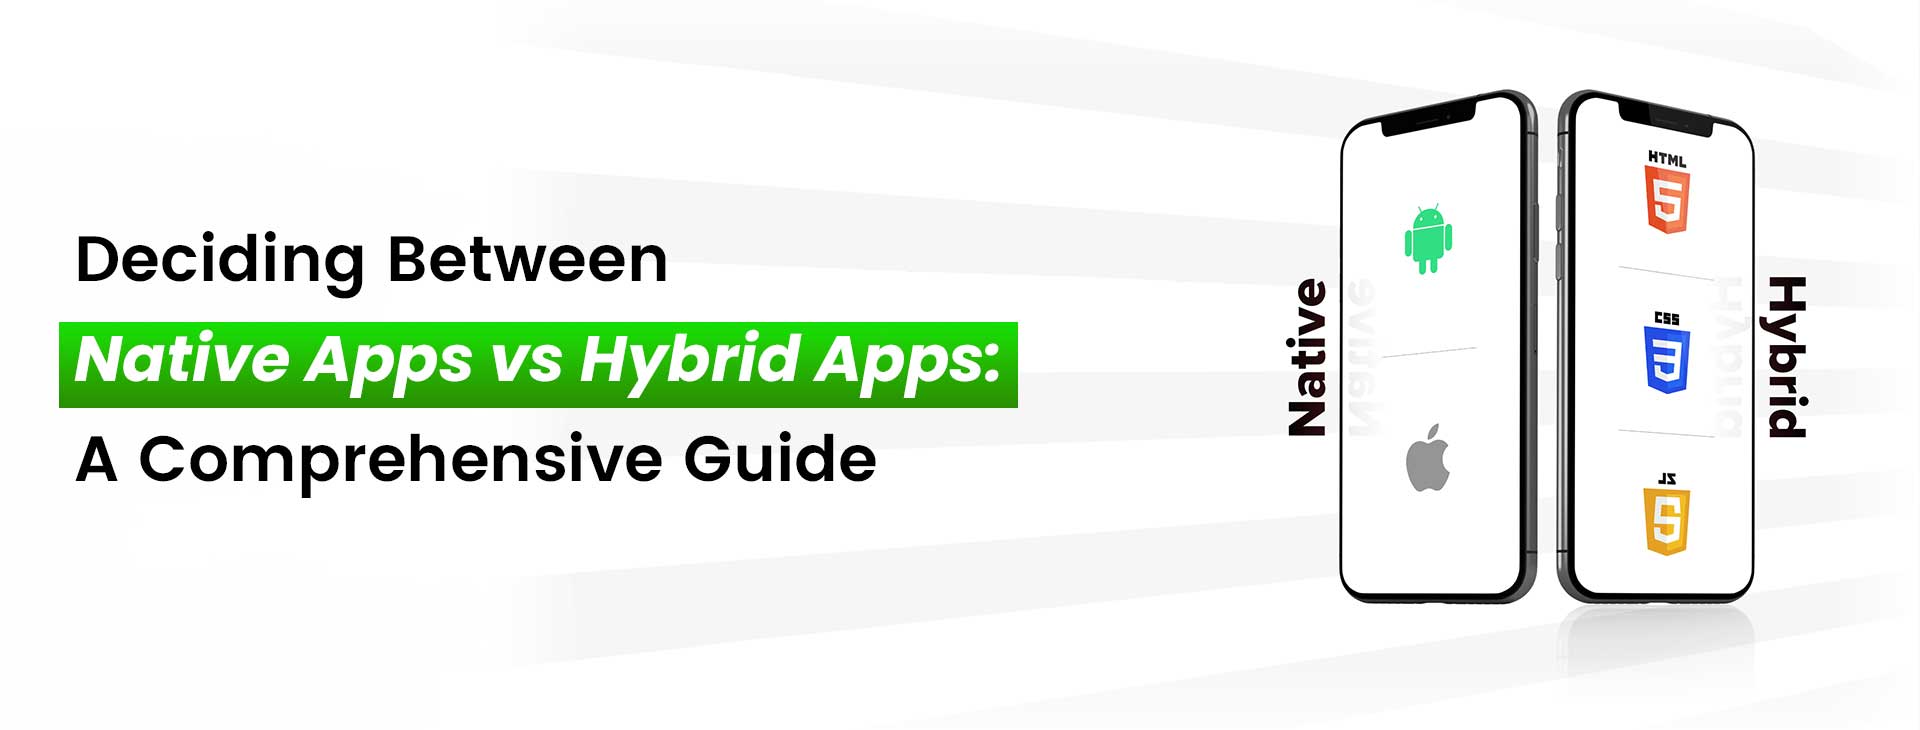 Deciding Between Native Apps vs Hybrid Apps: A Comprehensive Guide